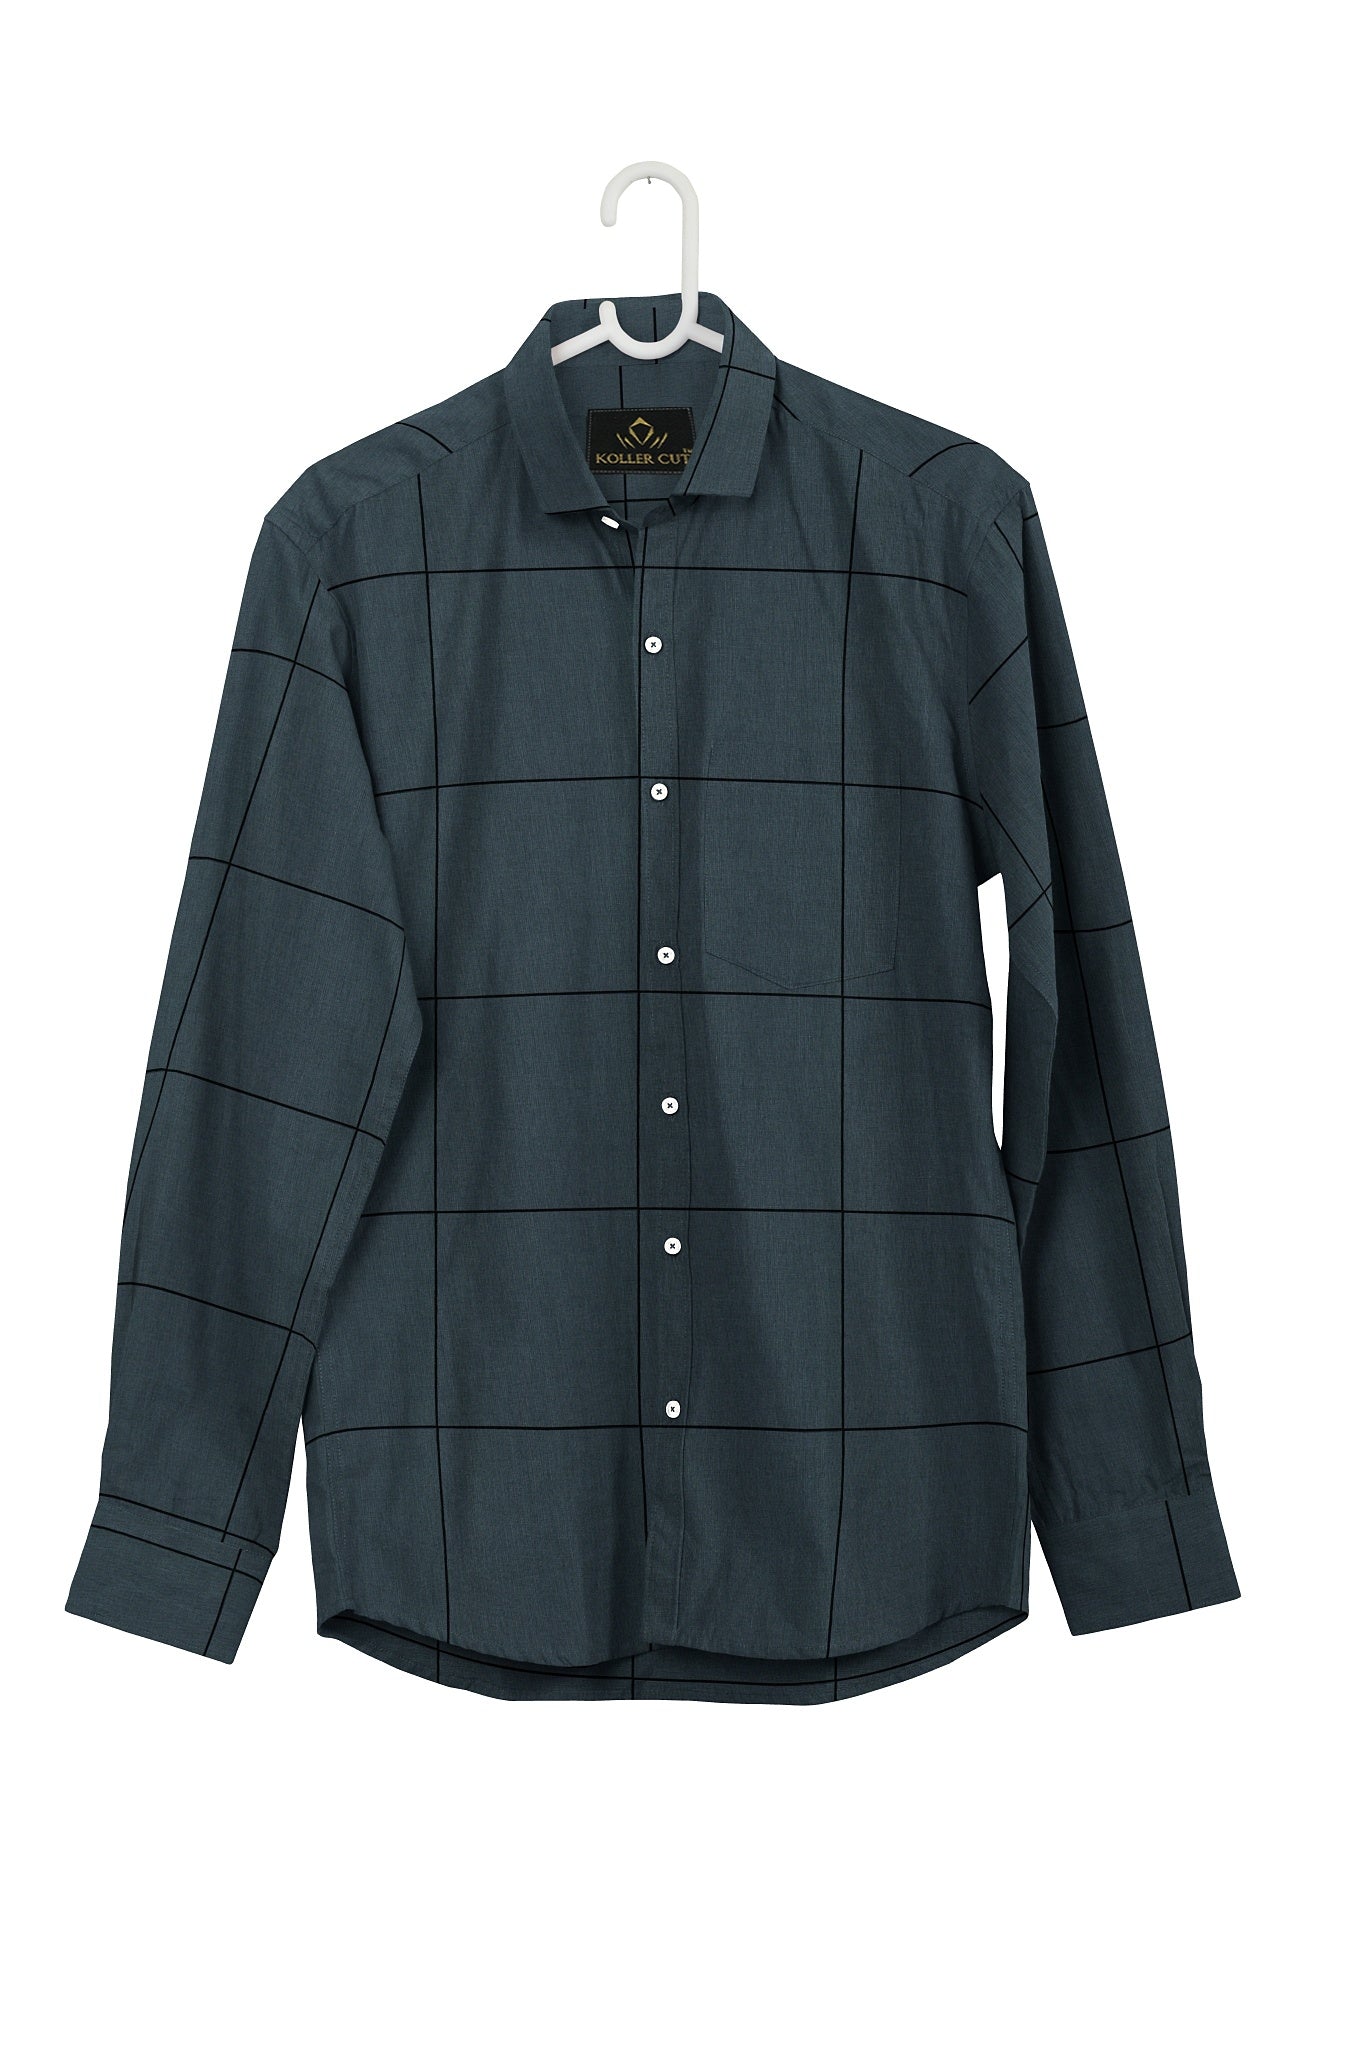 Spruce Blue and Black Checks Cotton Shirt